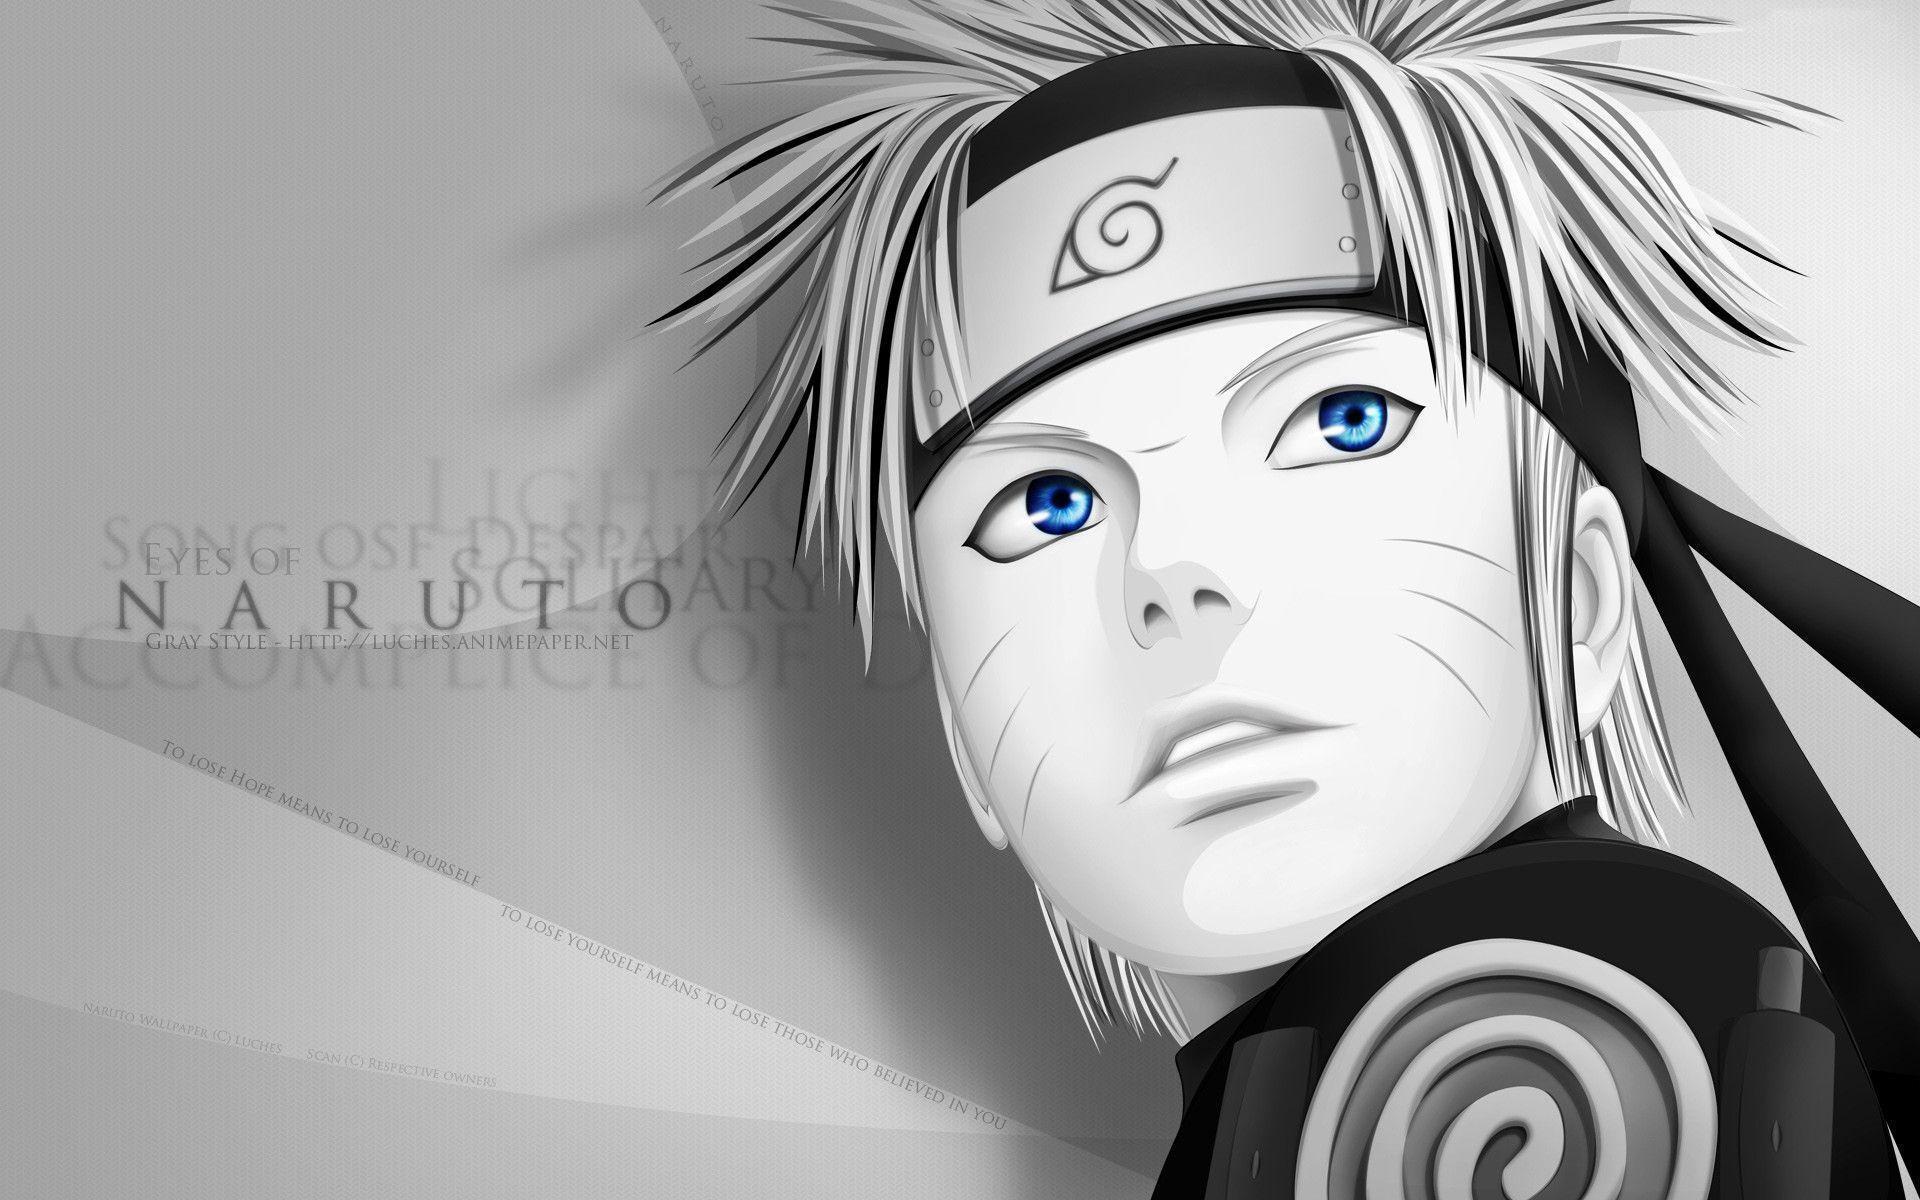 Naruto Shippuden Characters Image Wallpapers HD Wallpapers